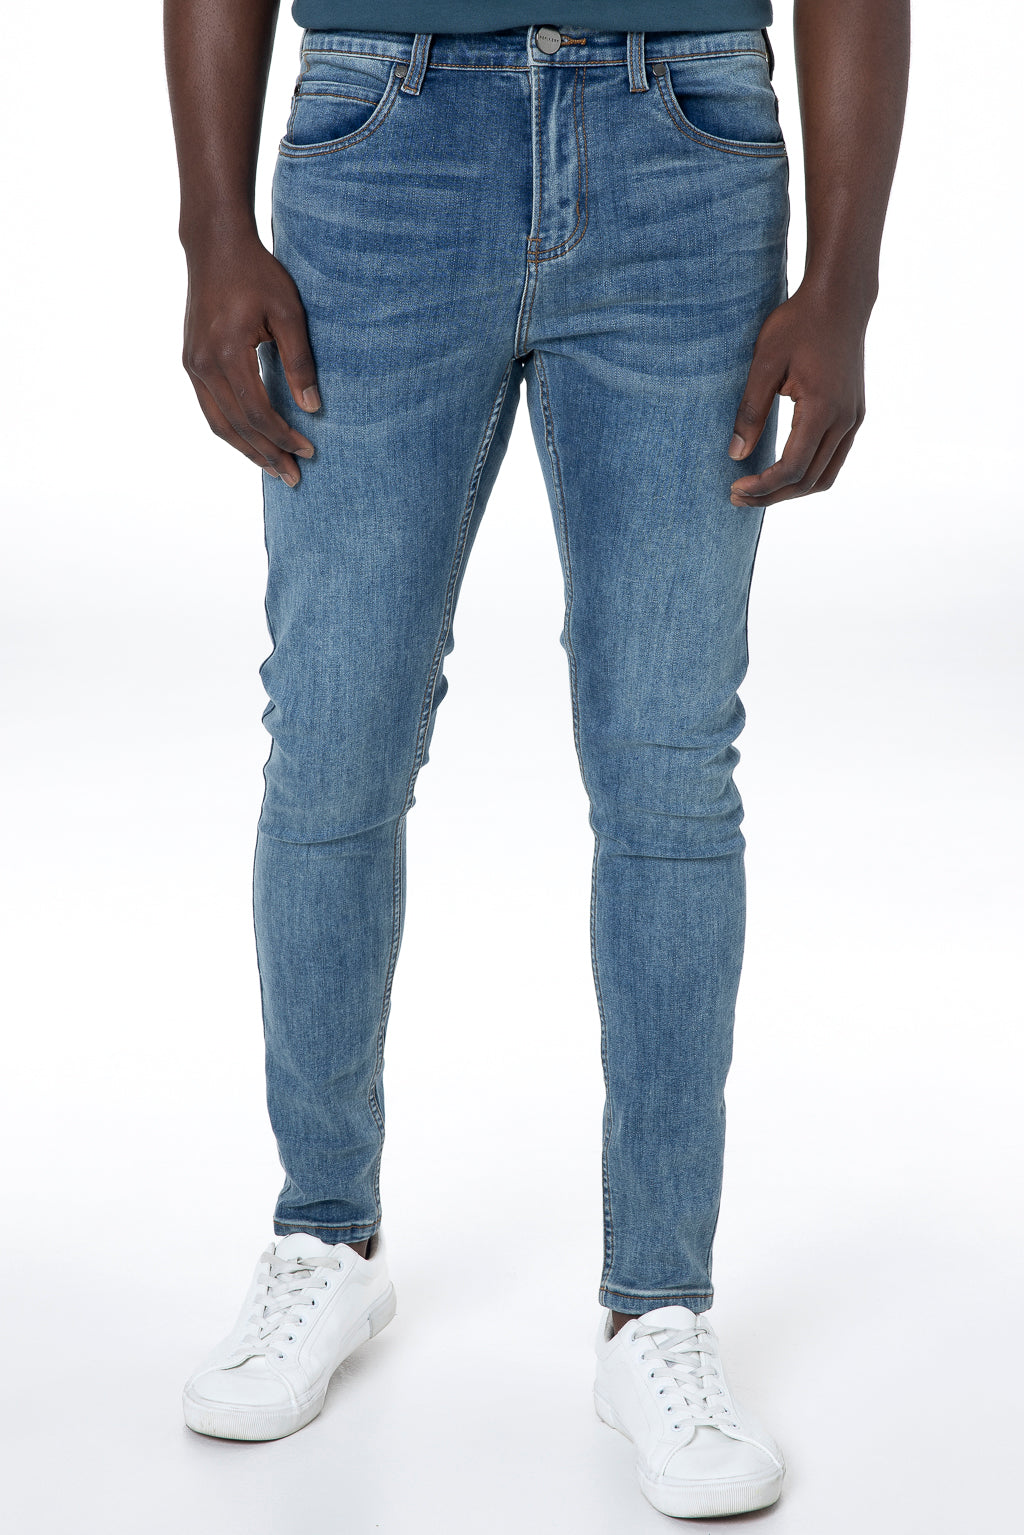 Rf10 Denim Jeans _ 141710 _ Blue